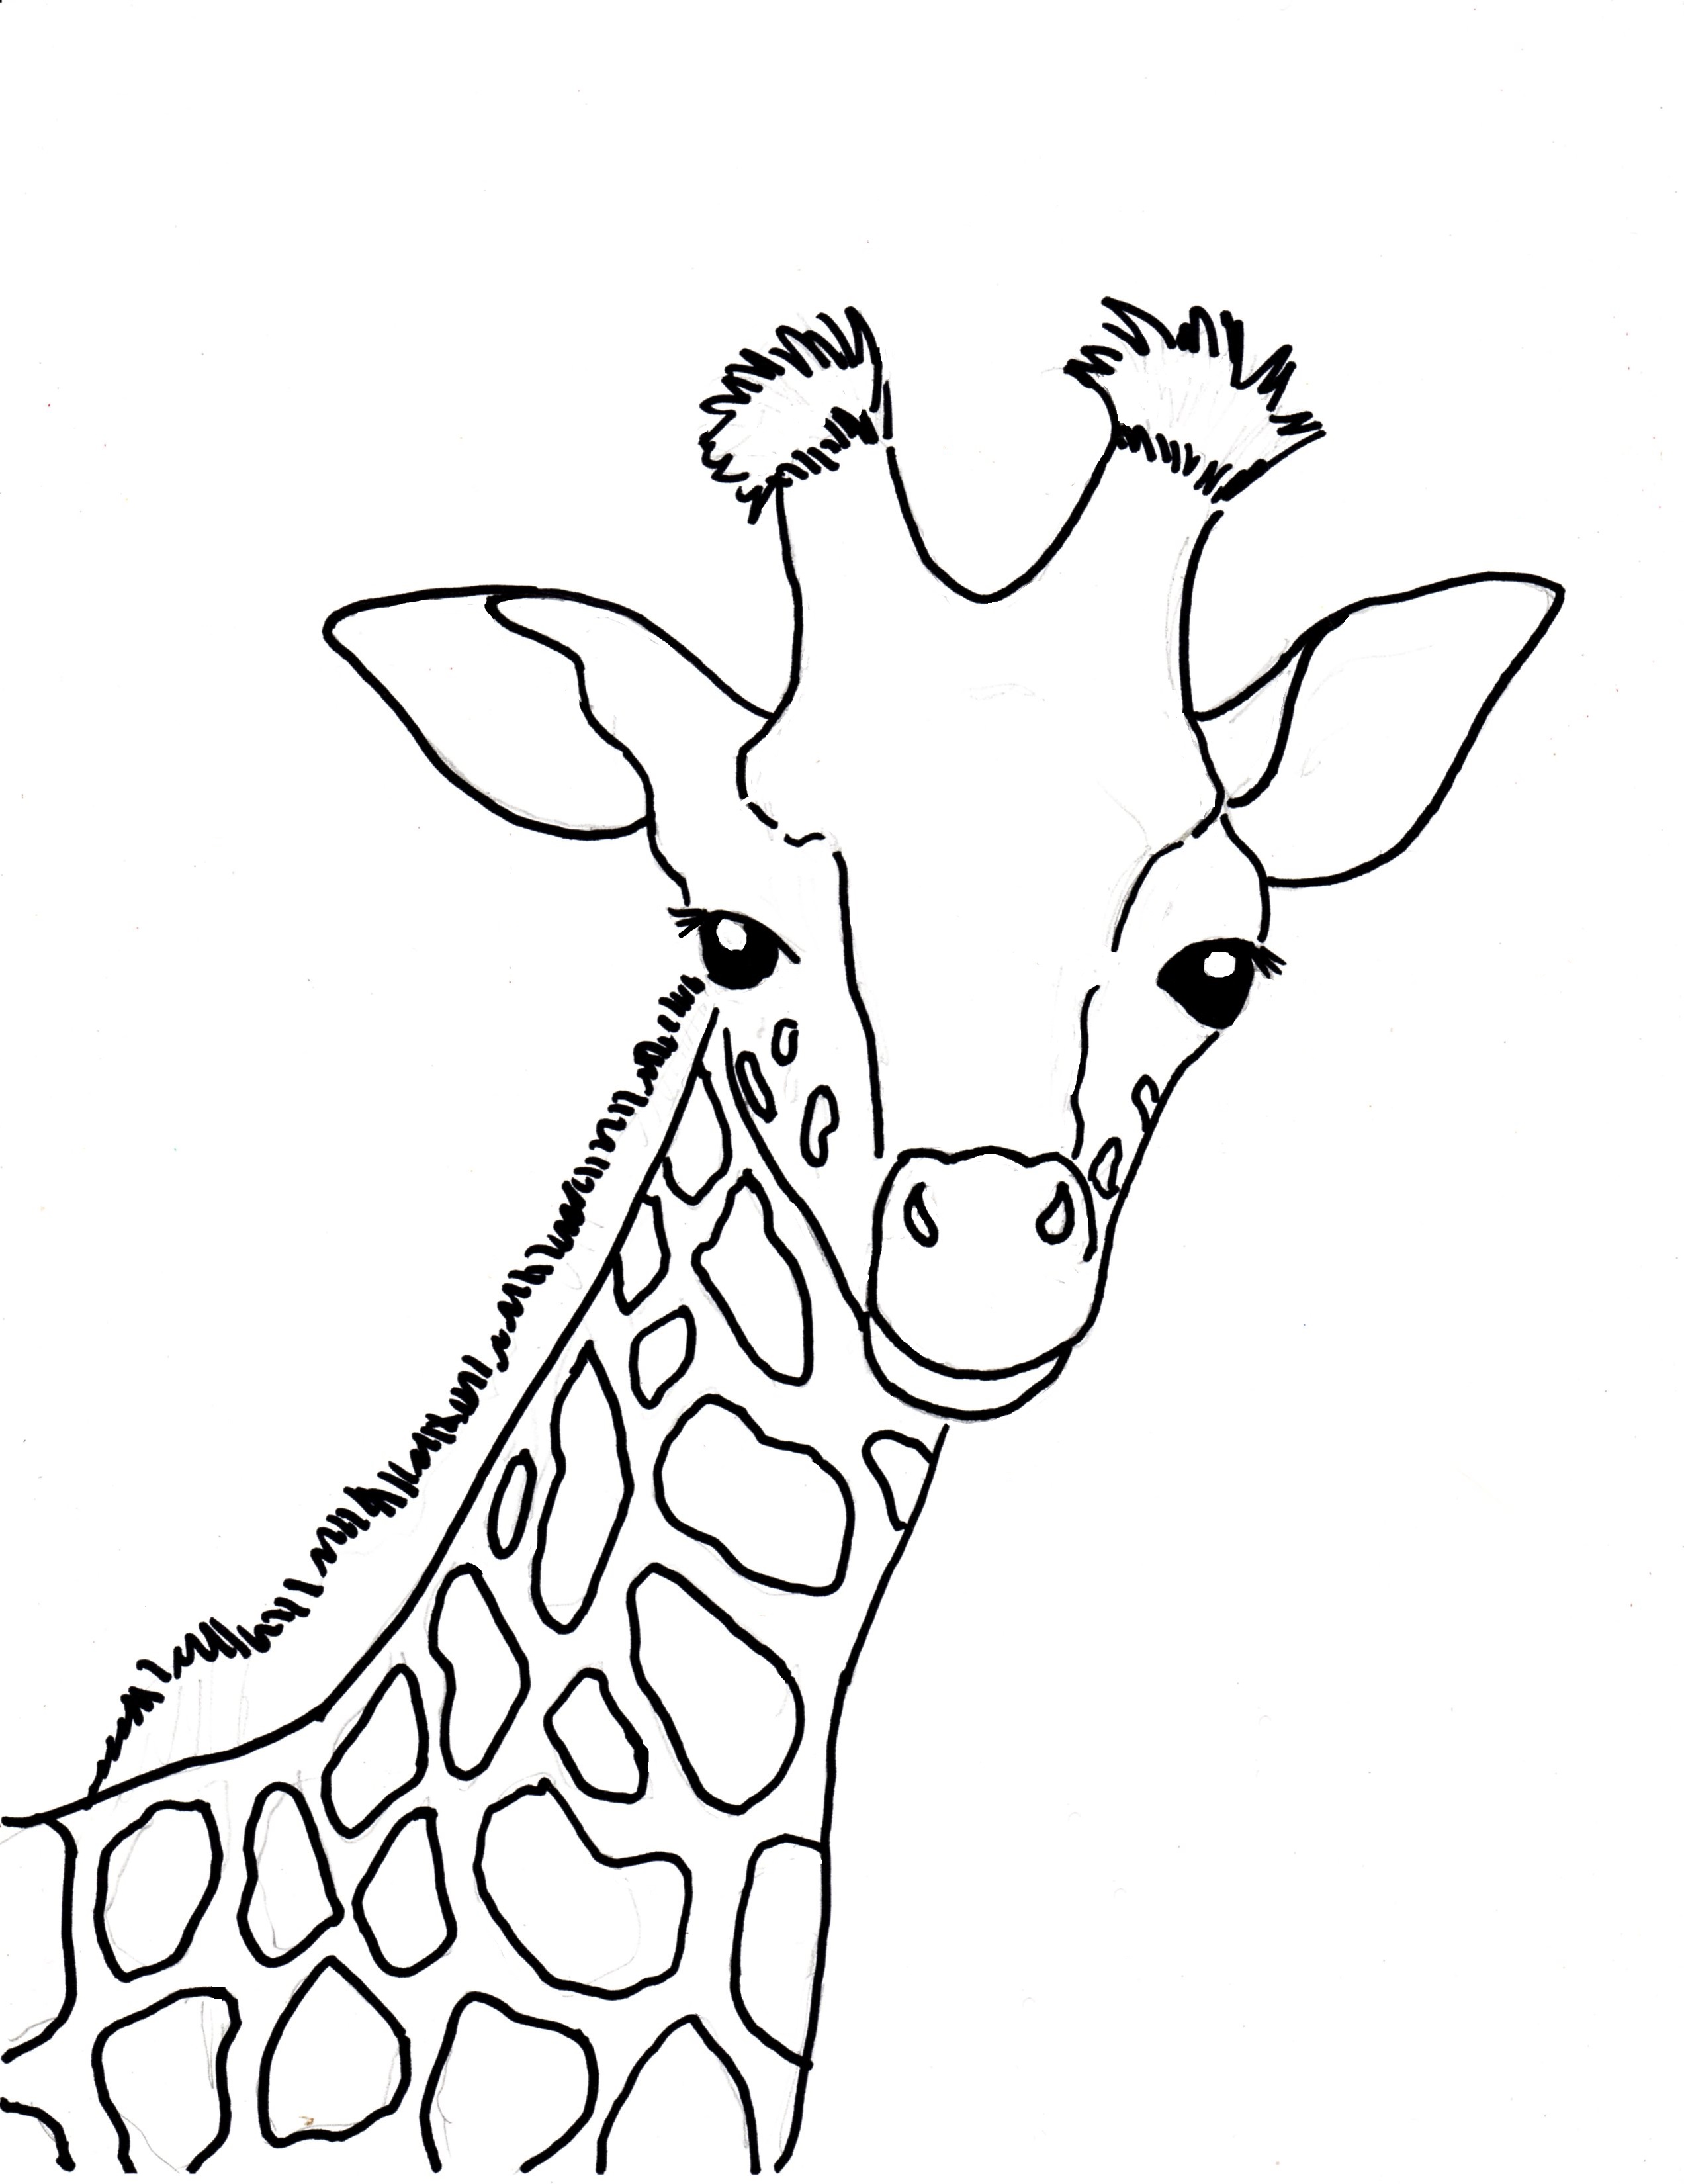 Baby Giraffe Coloring Page - Samantha Bell